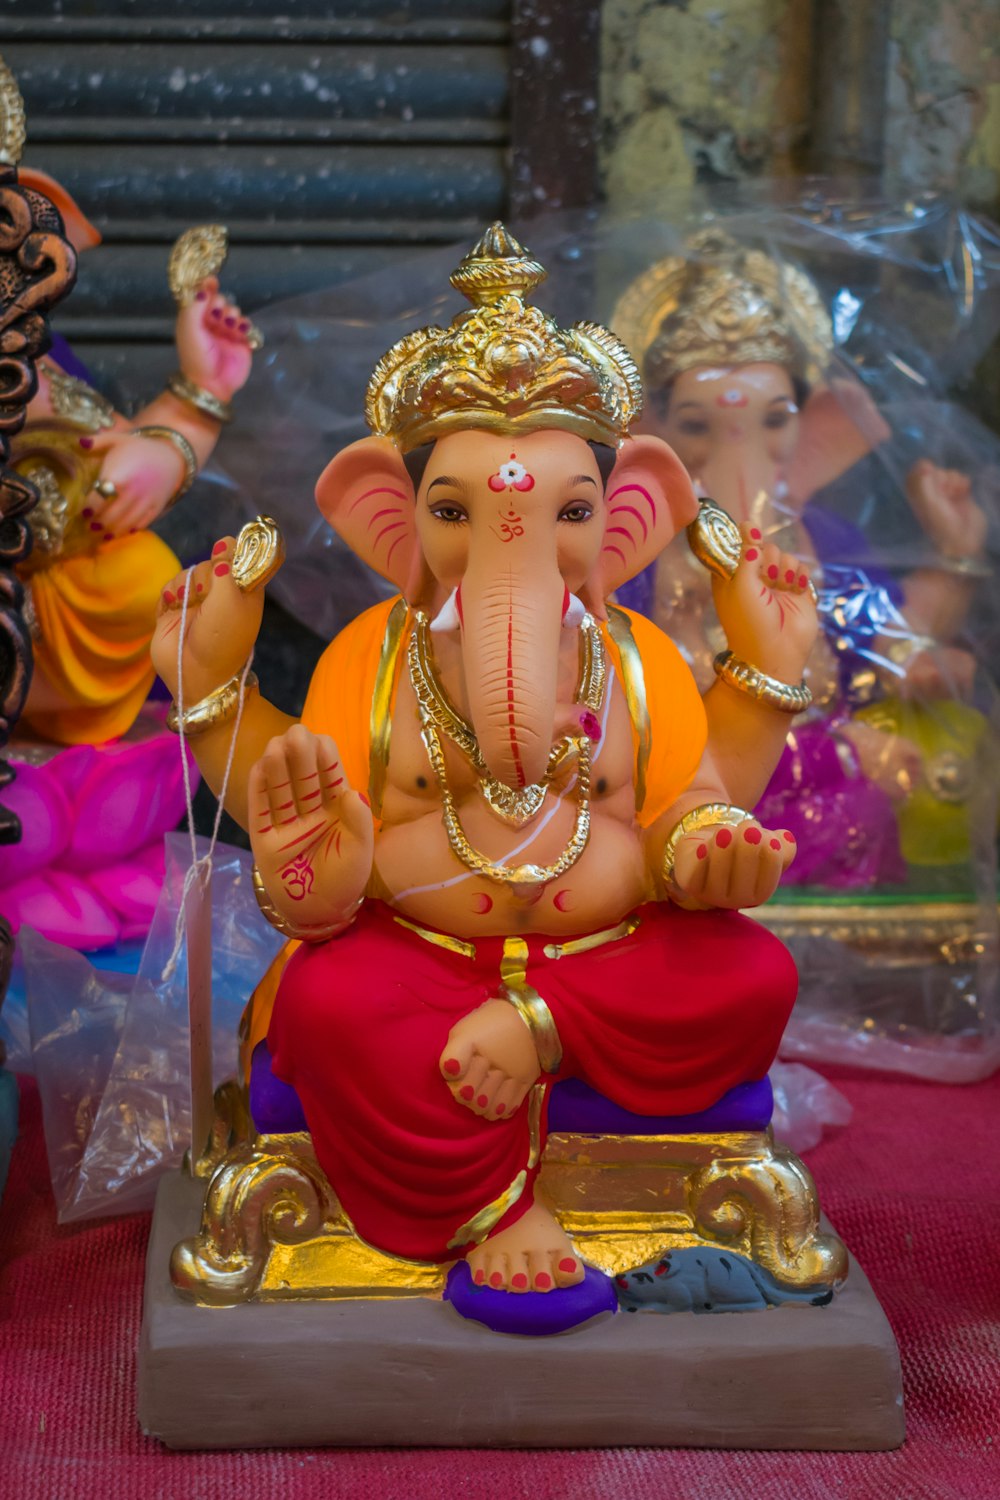 gold hindu deity figurine on table